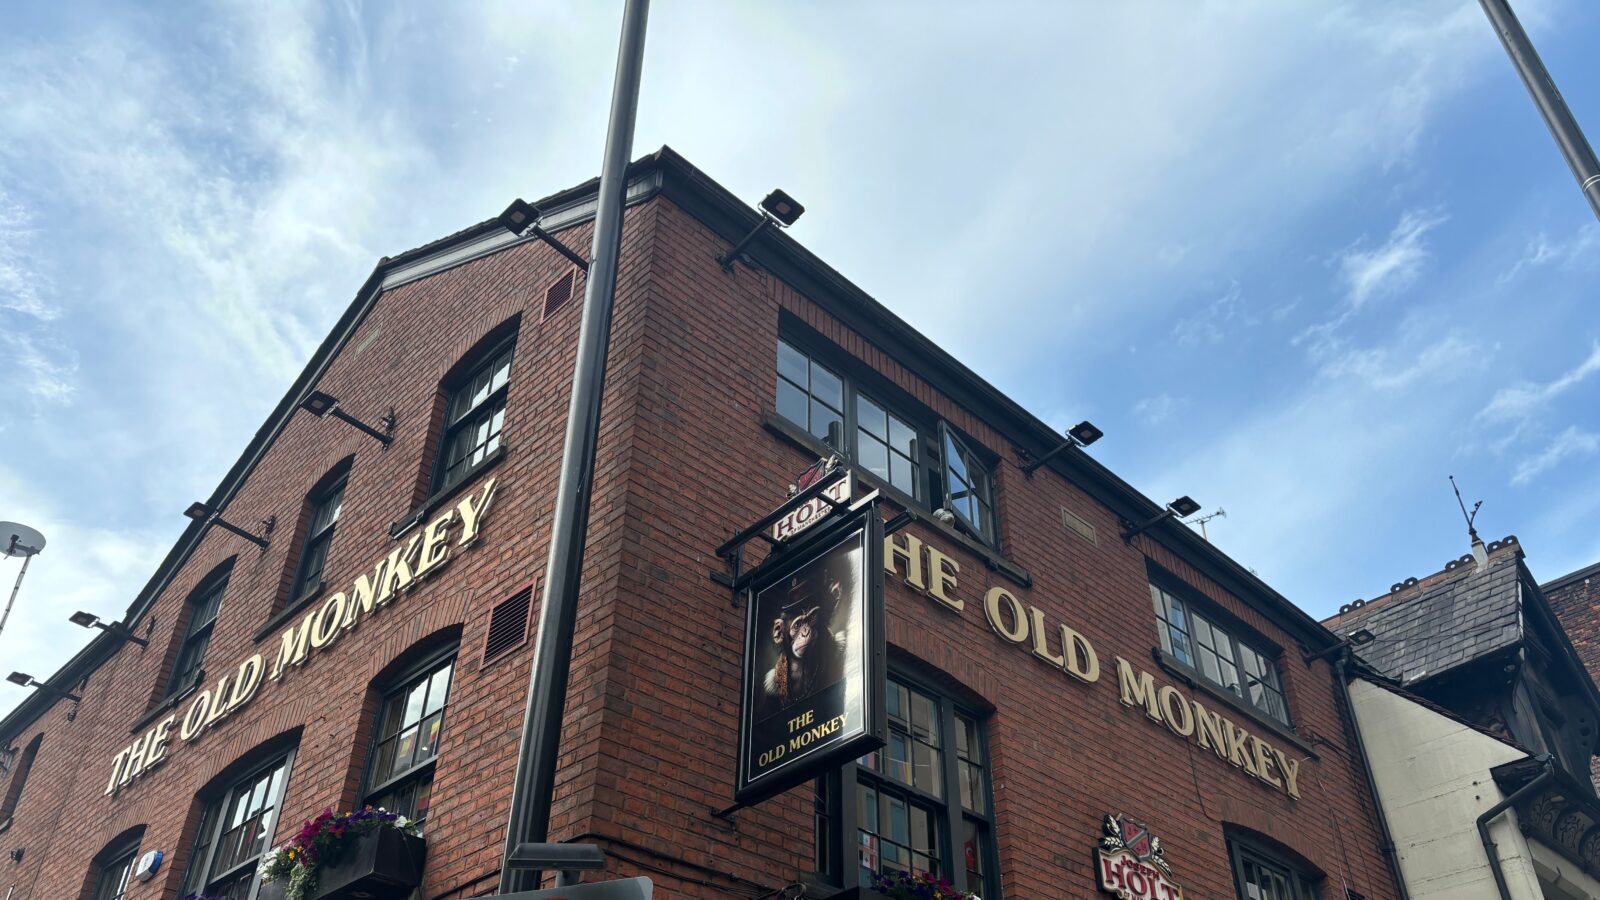 old monkey manchester pub